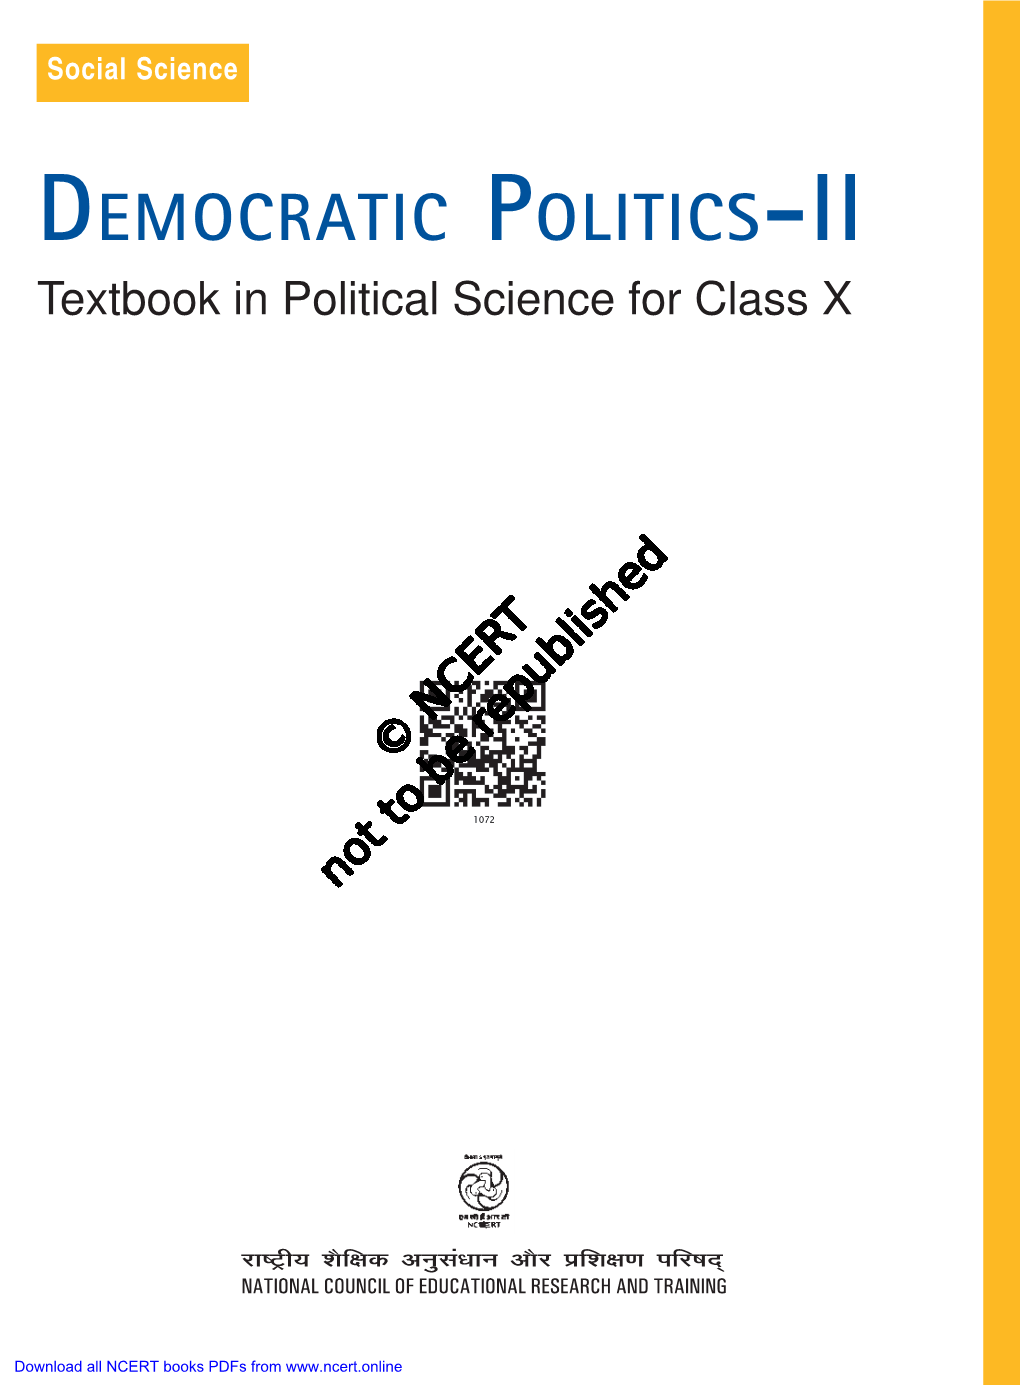 DEMOCRATIC POLITICS-II Textbook in Political Science for Class X